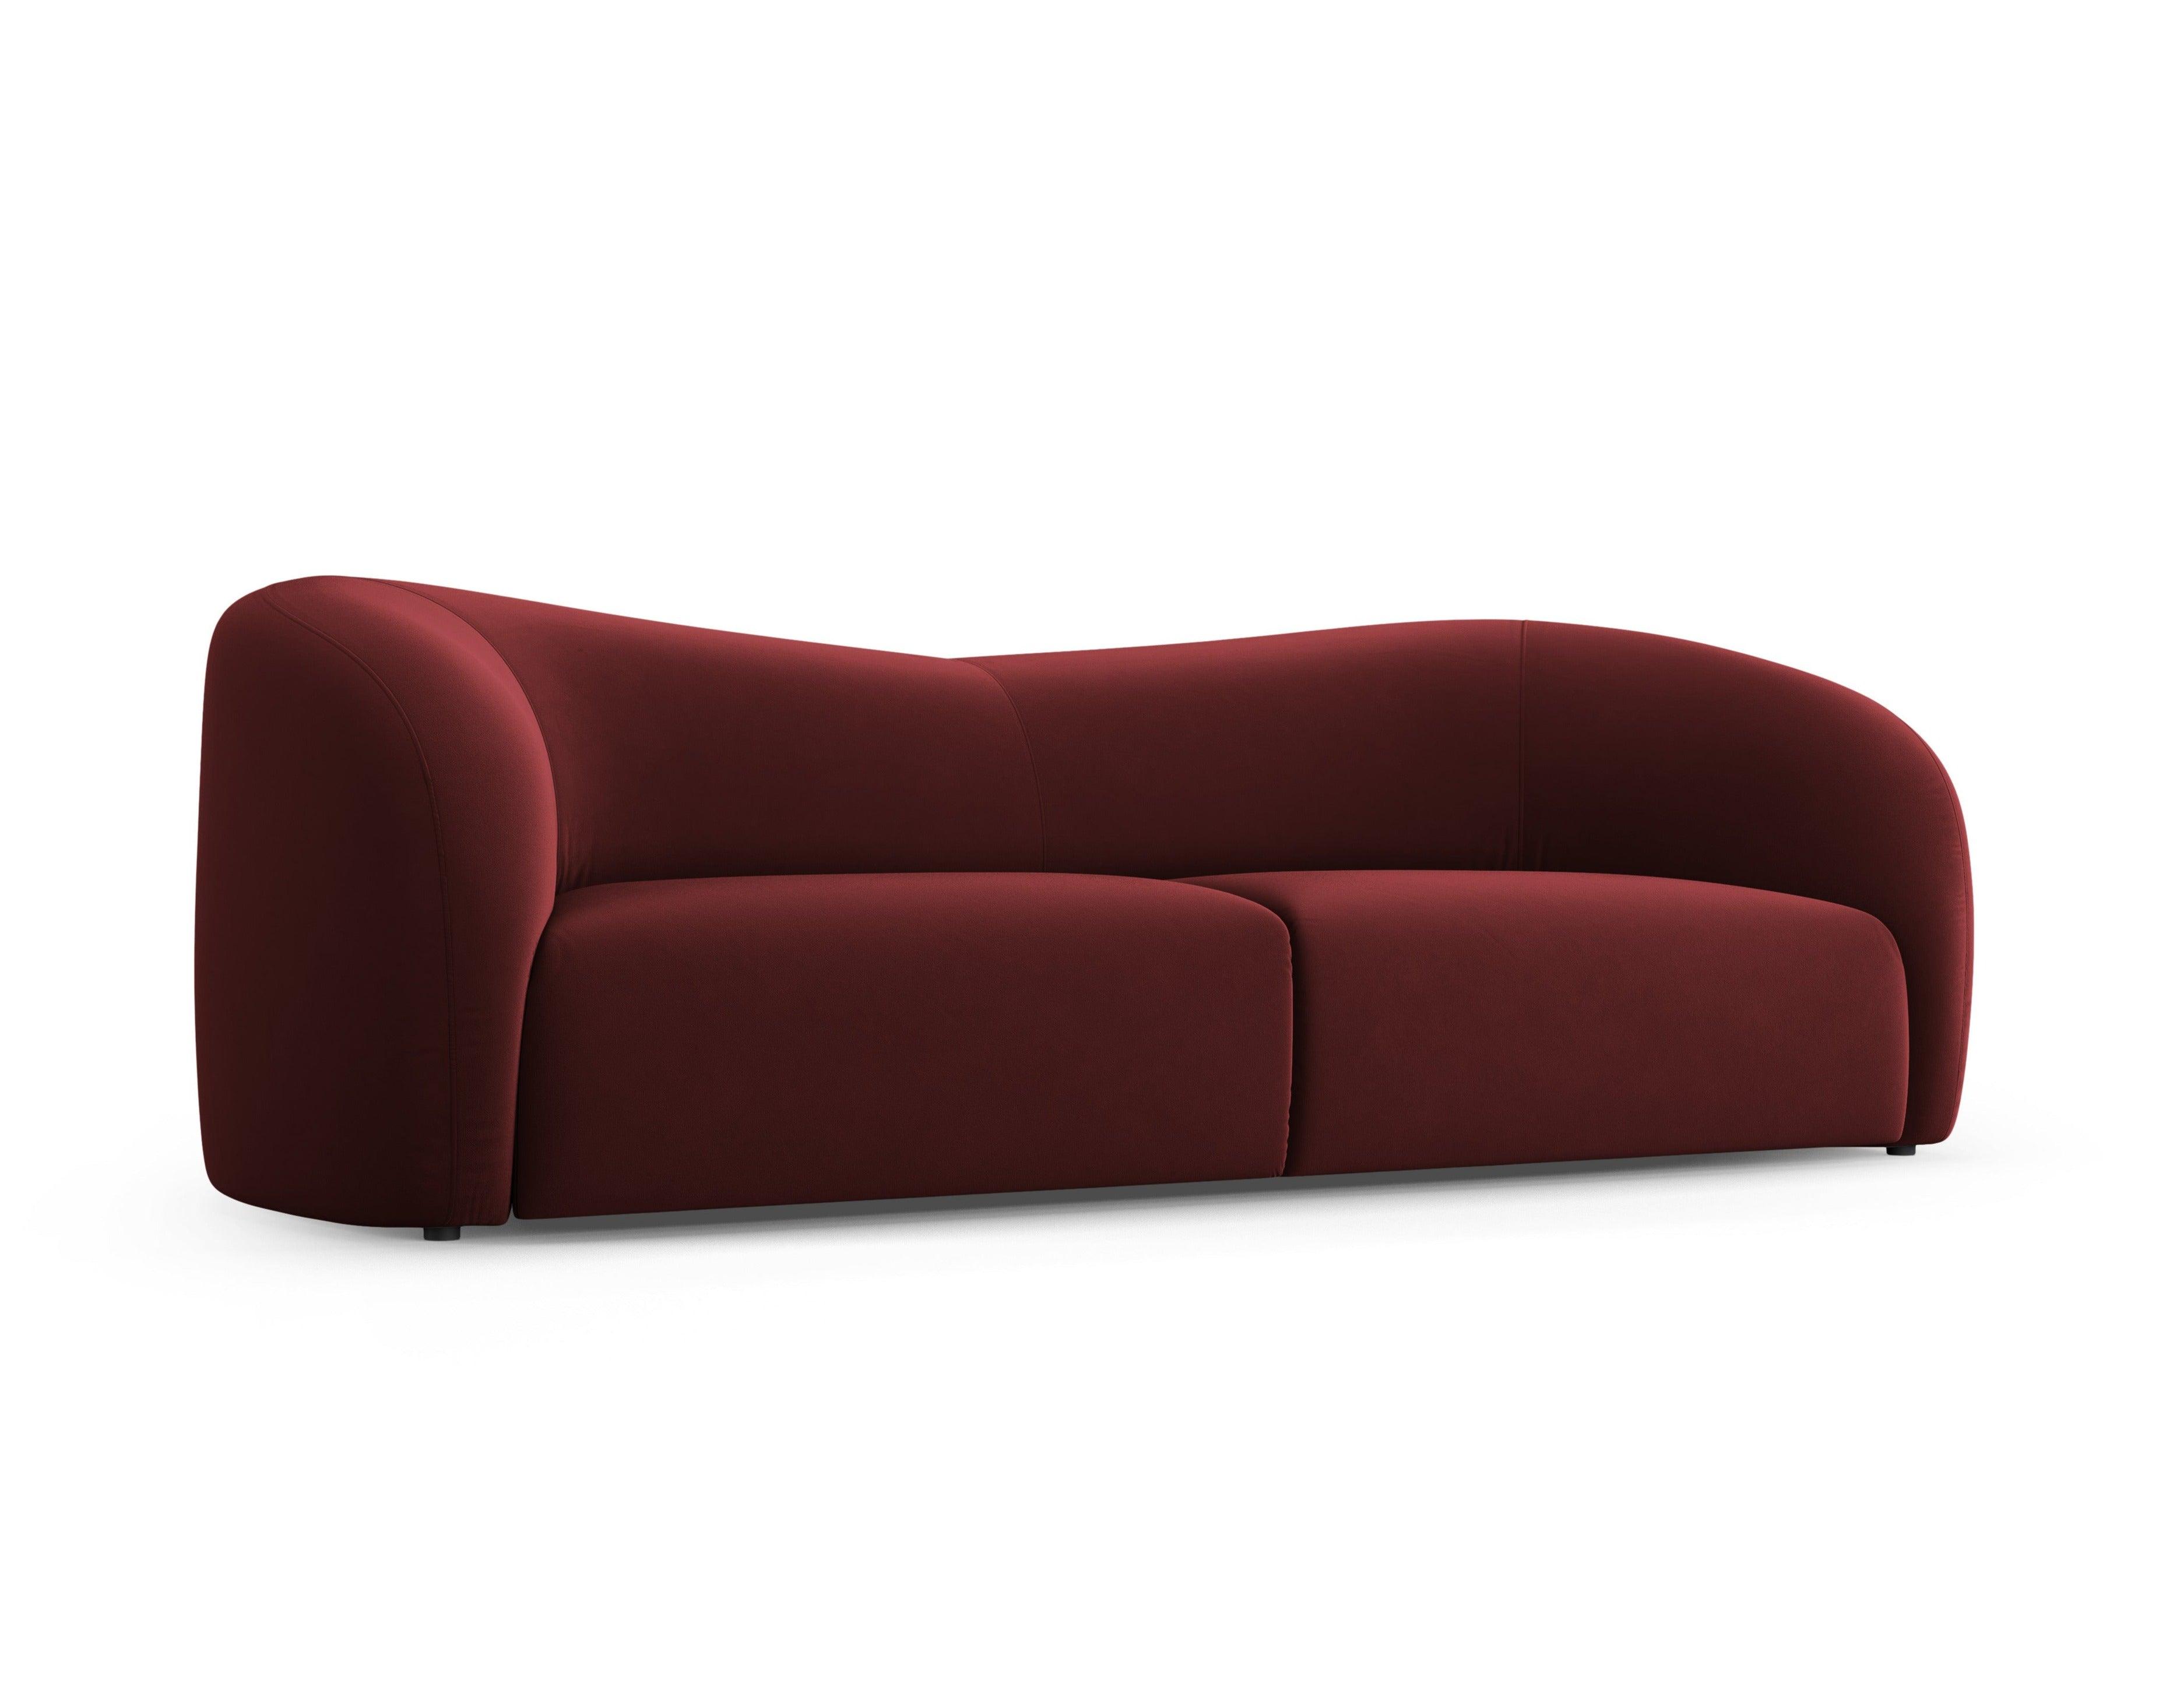 Velvet Sofa, "Santi", 3 Seats, Dark Red, 237x90x75
Made in Europe Interieurs 86    Eye on Design